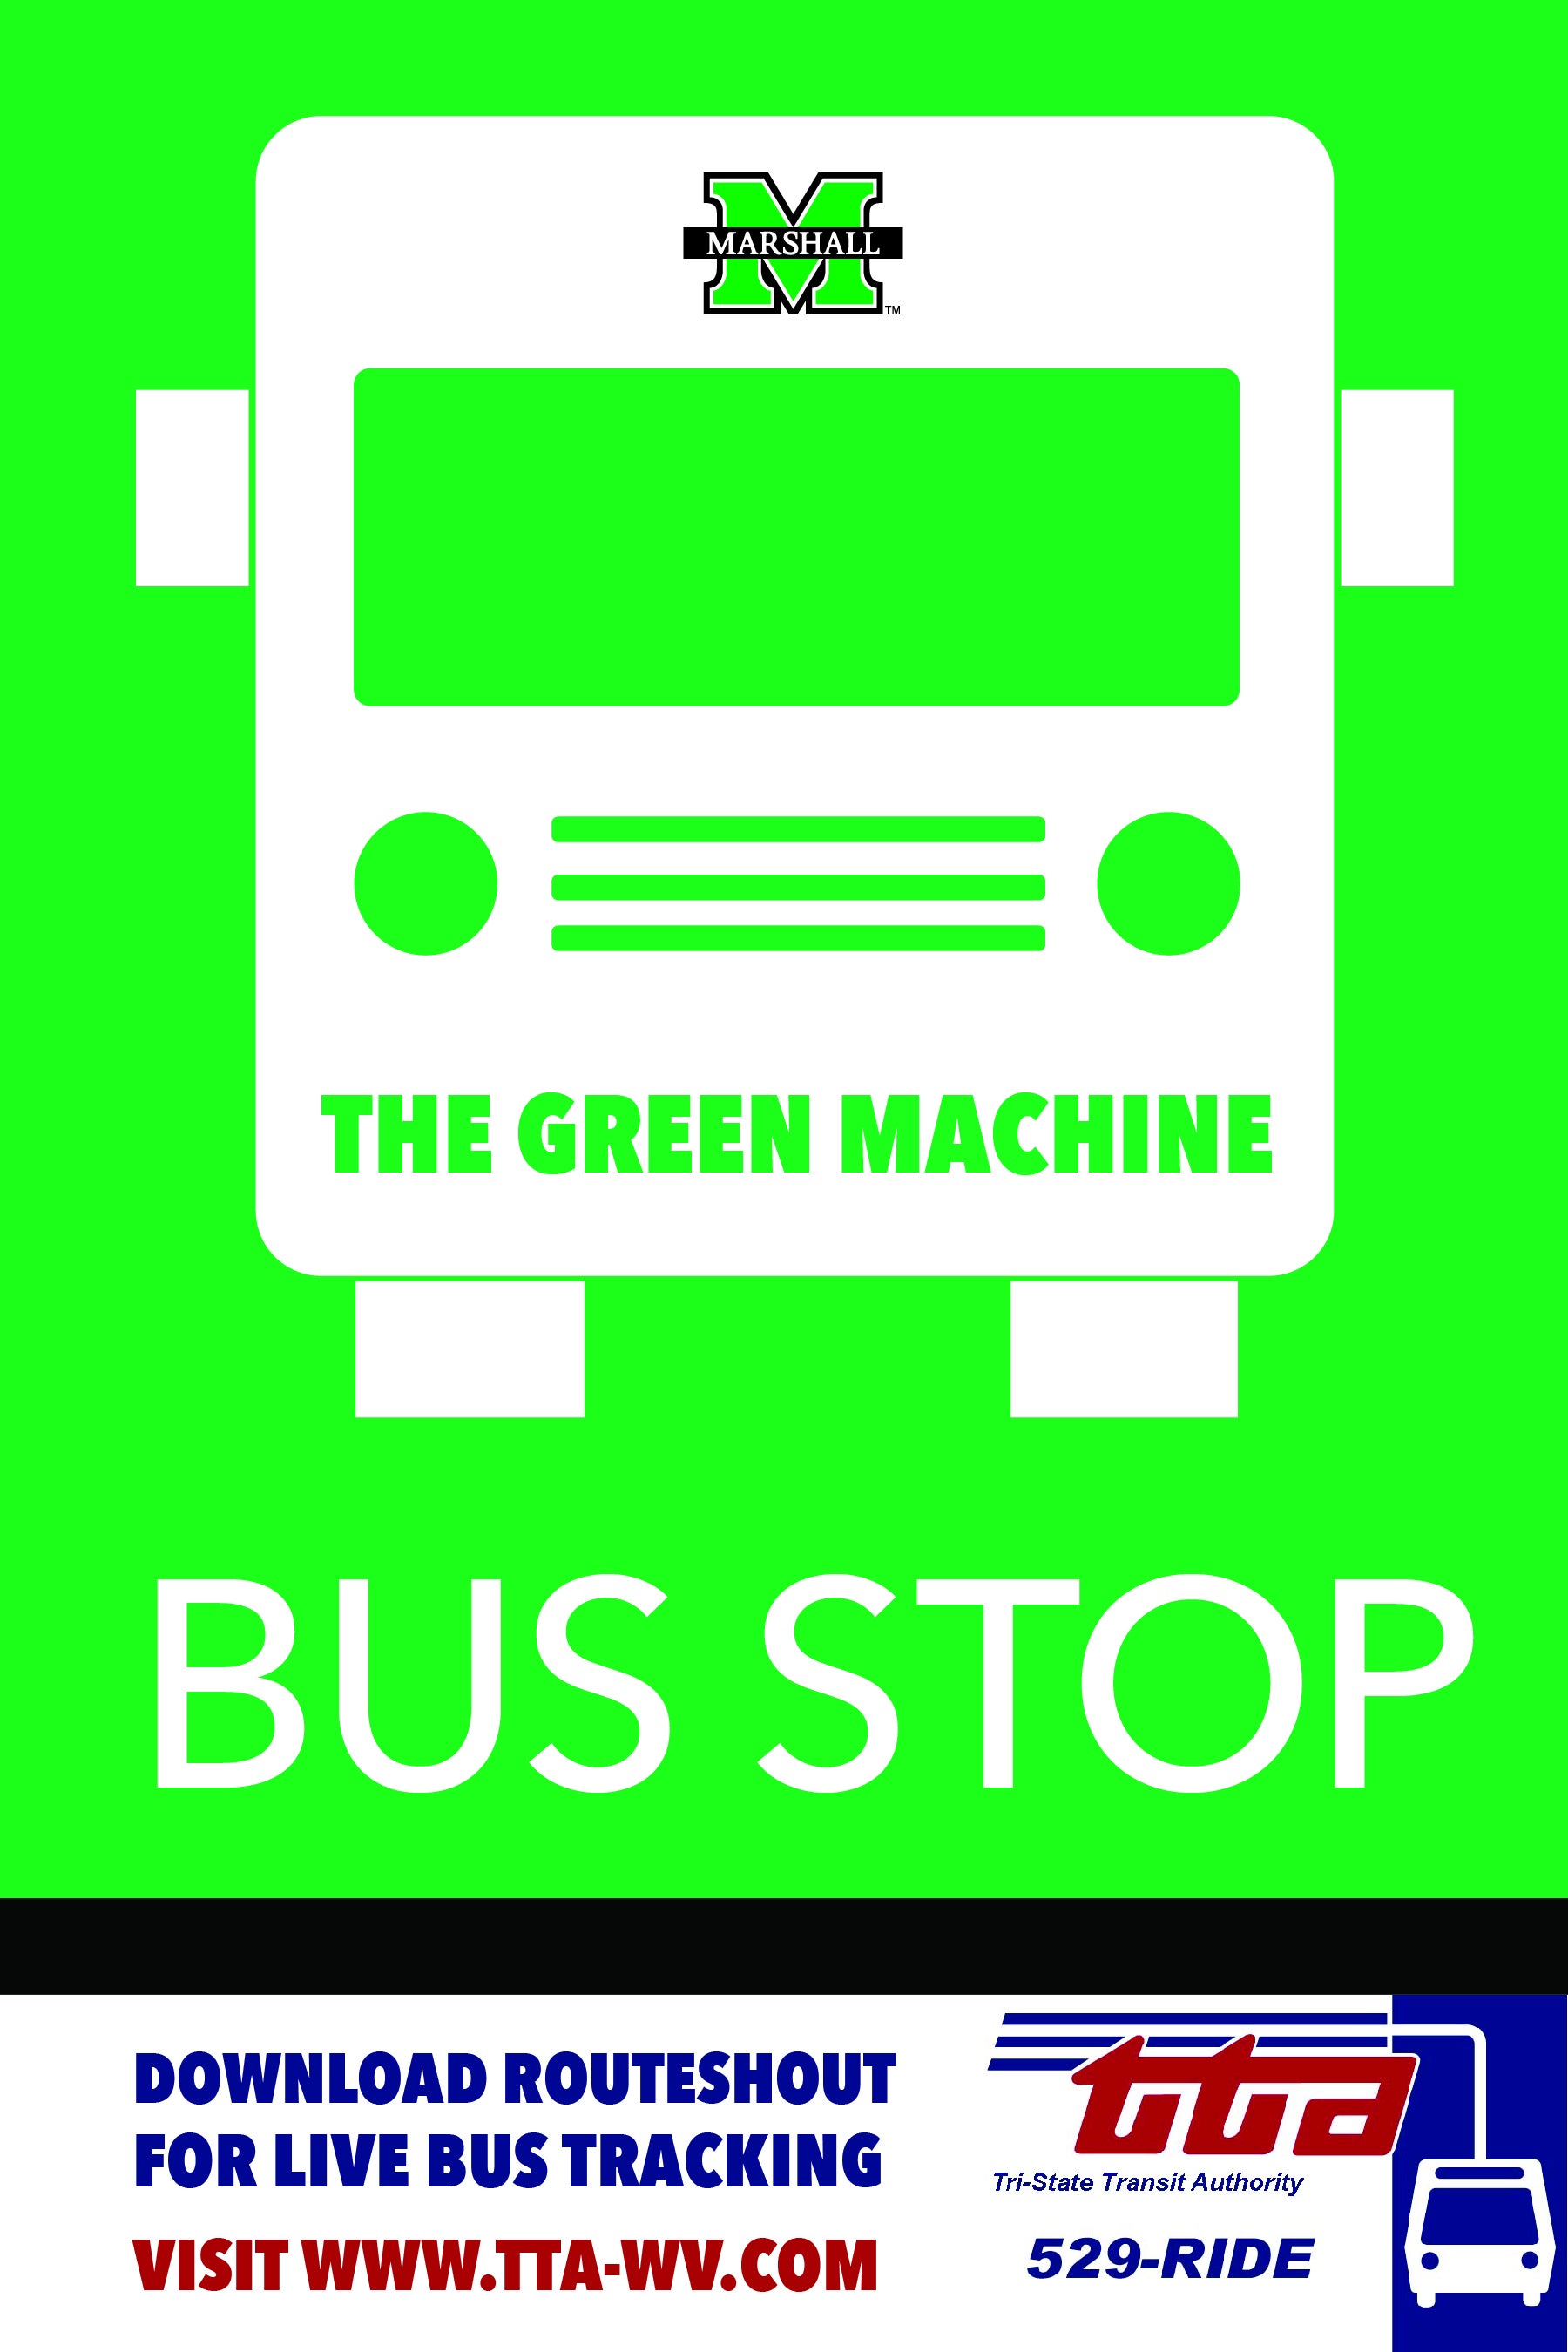 Green Machine, Marshall Bus, Safe, Safety, TTA, Tri-State Transit Authority, Ride